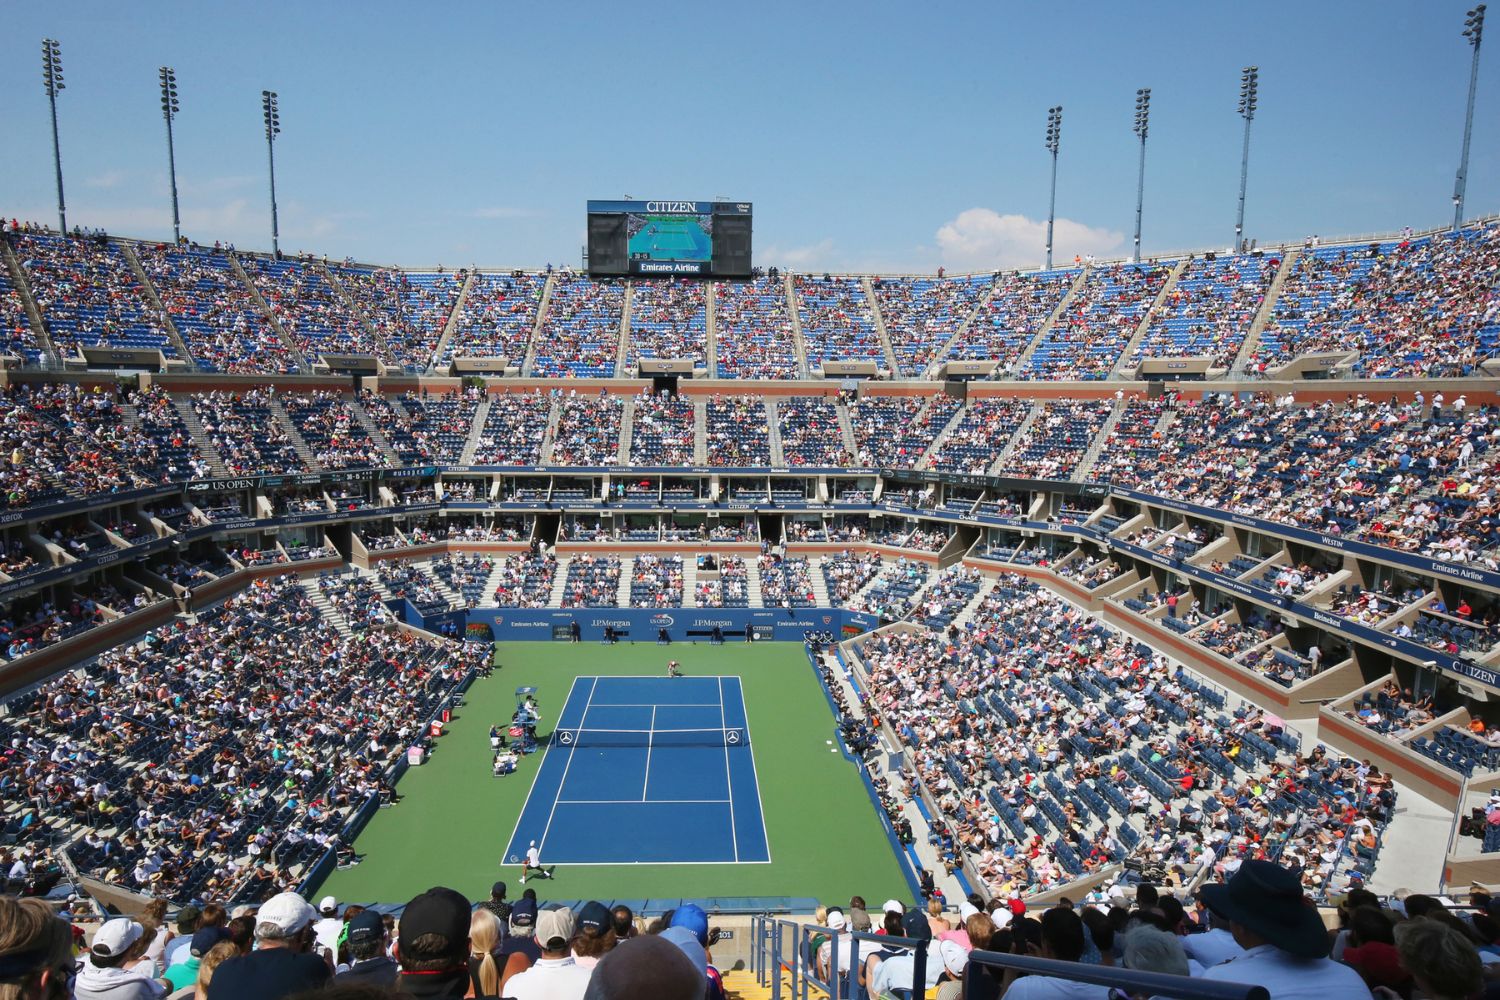 Tennis Viewership Statistics